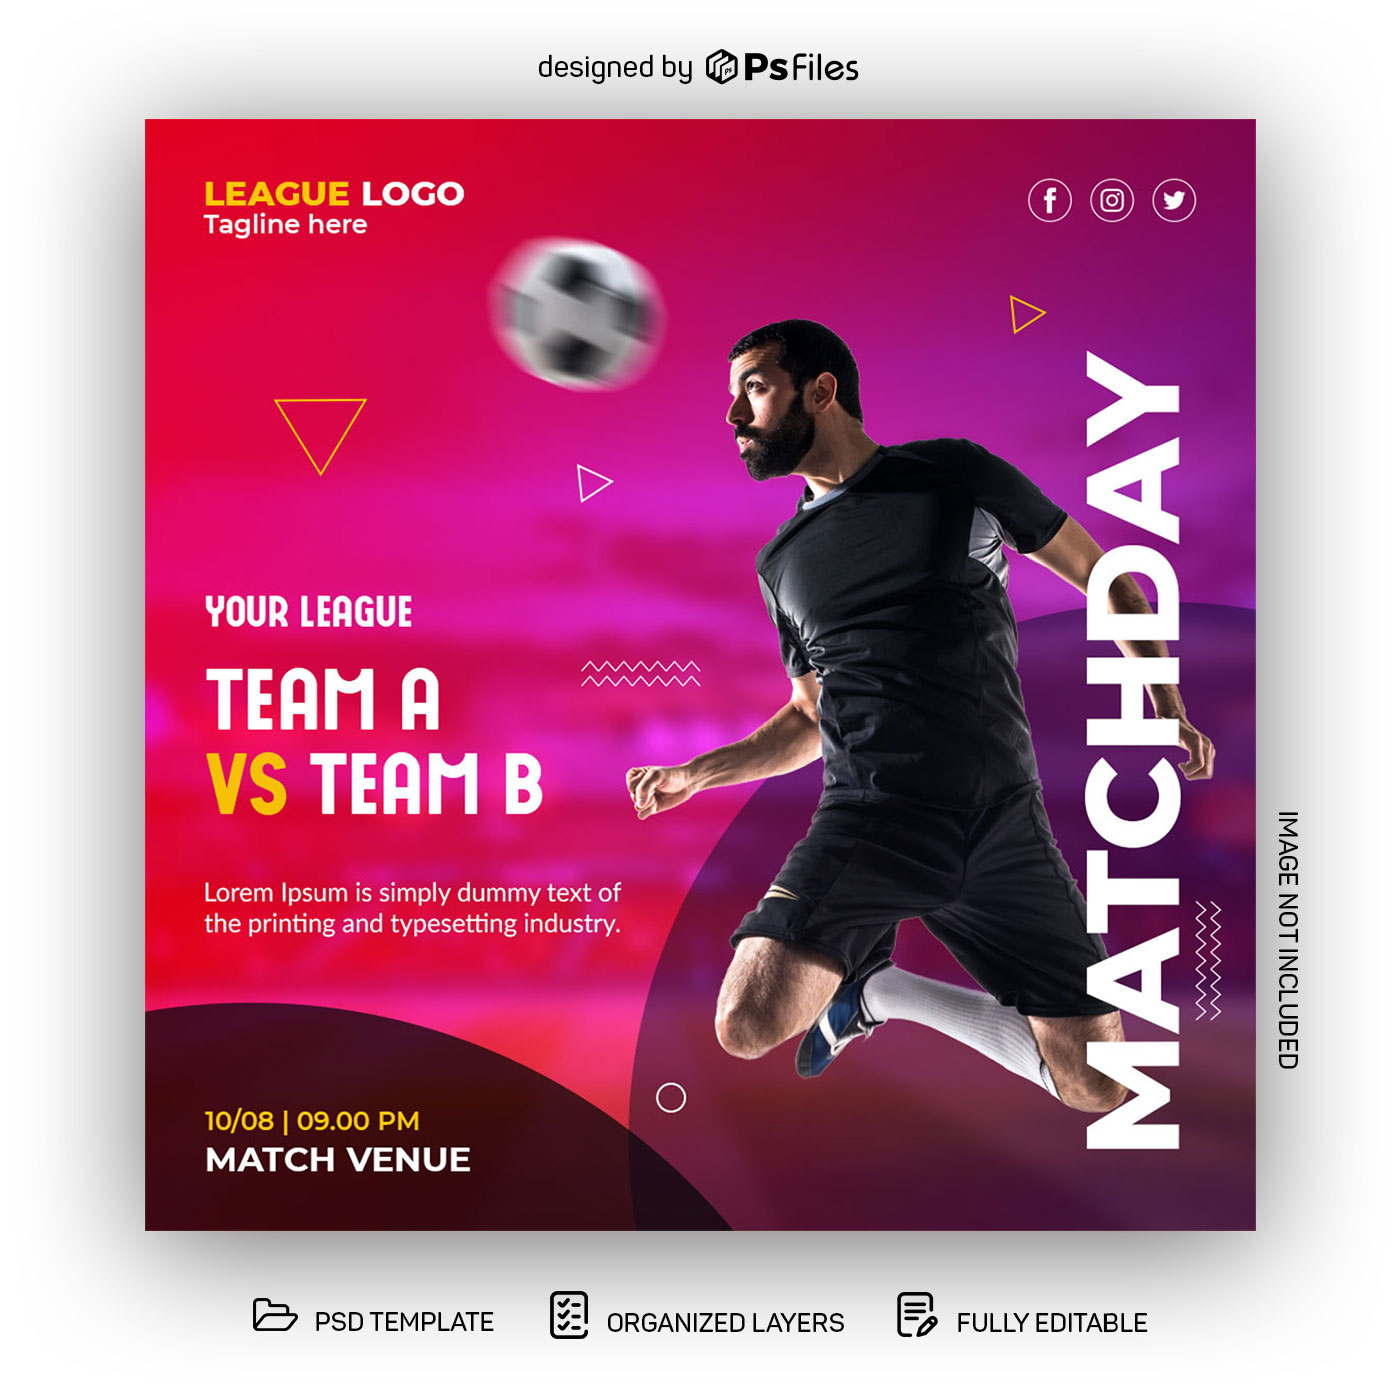 PsFiles Soccer League Match Sports Instagram Post Design Template Free Psd